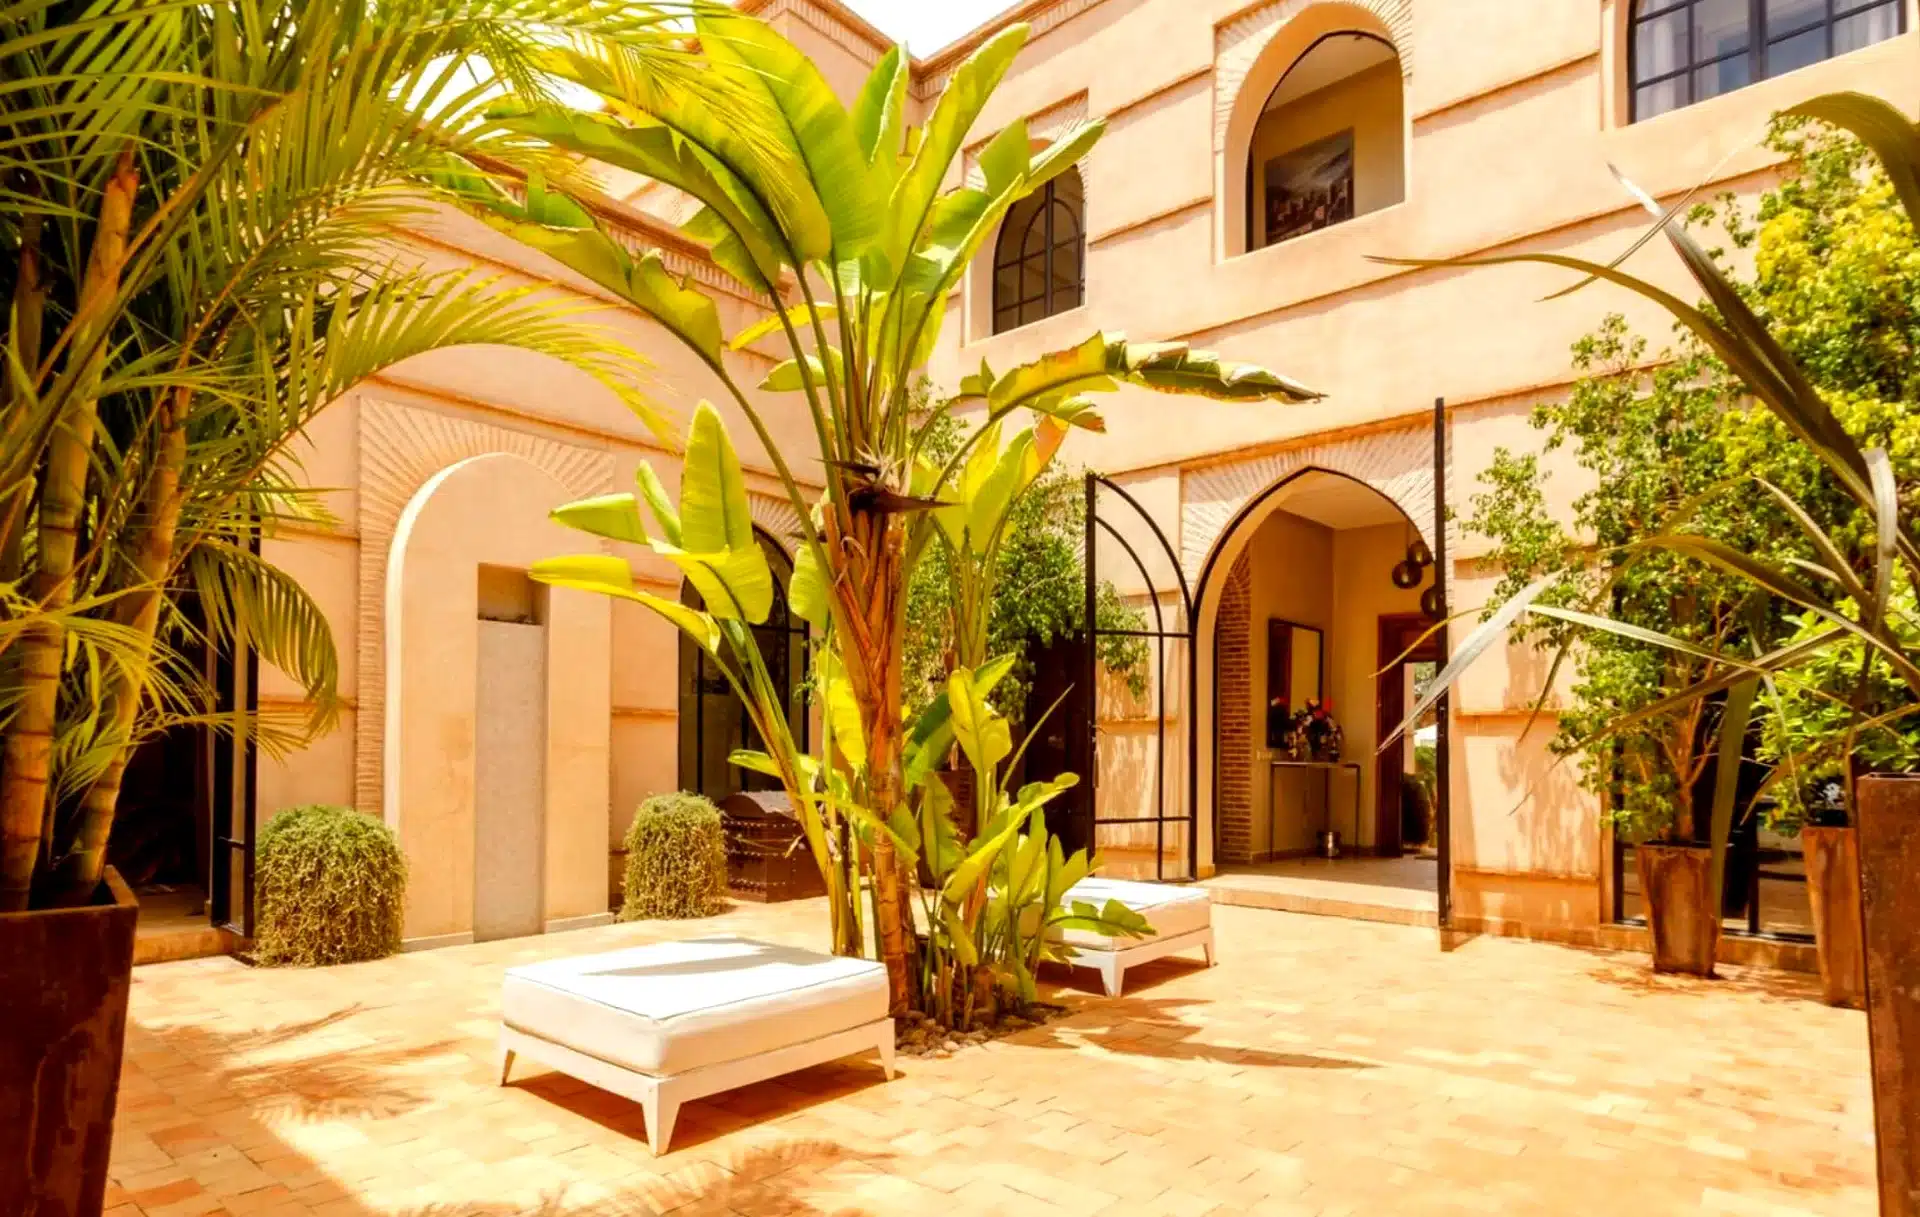 Inside building at Luxury Marrakesh Villa, fundraiser auction items, live auction items